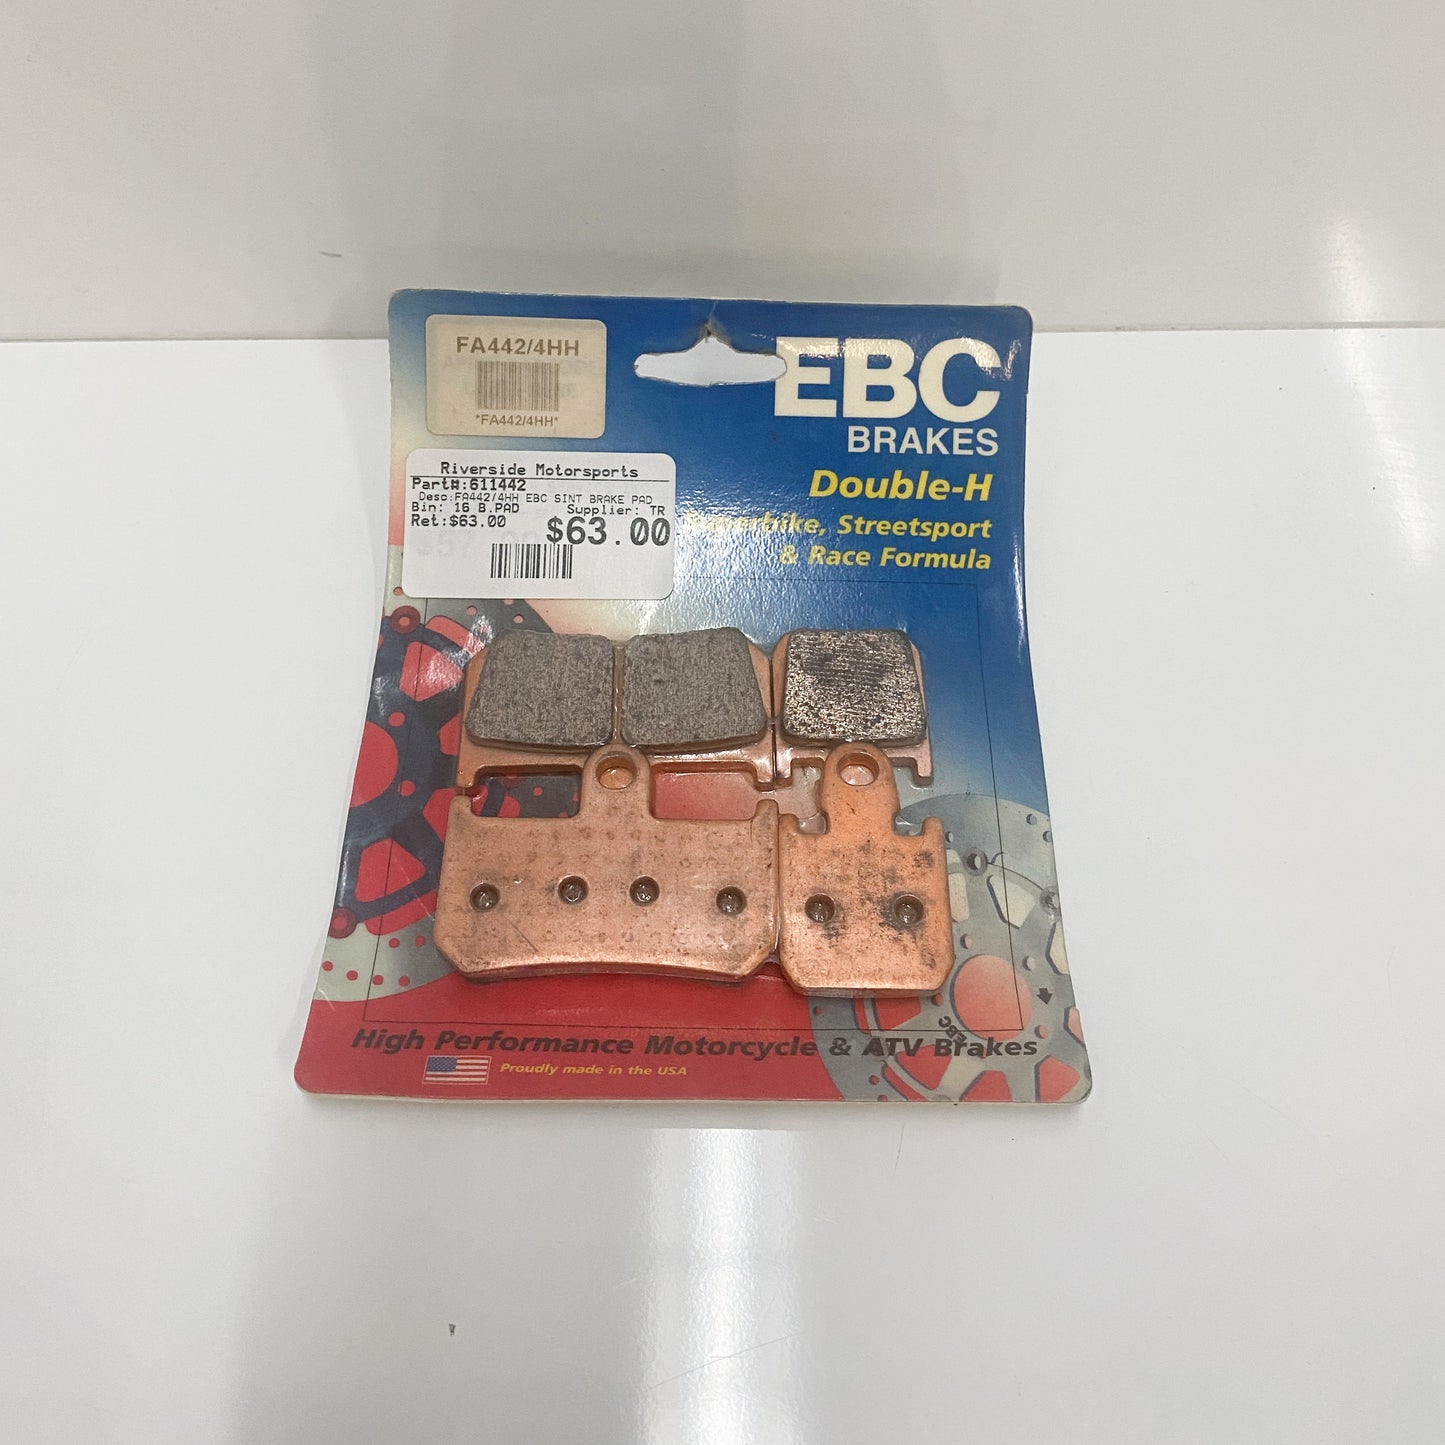 EBC FA442/HH Brake Pads